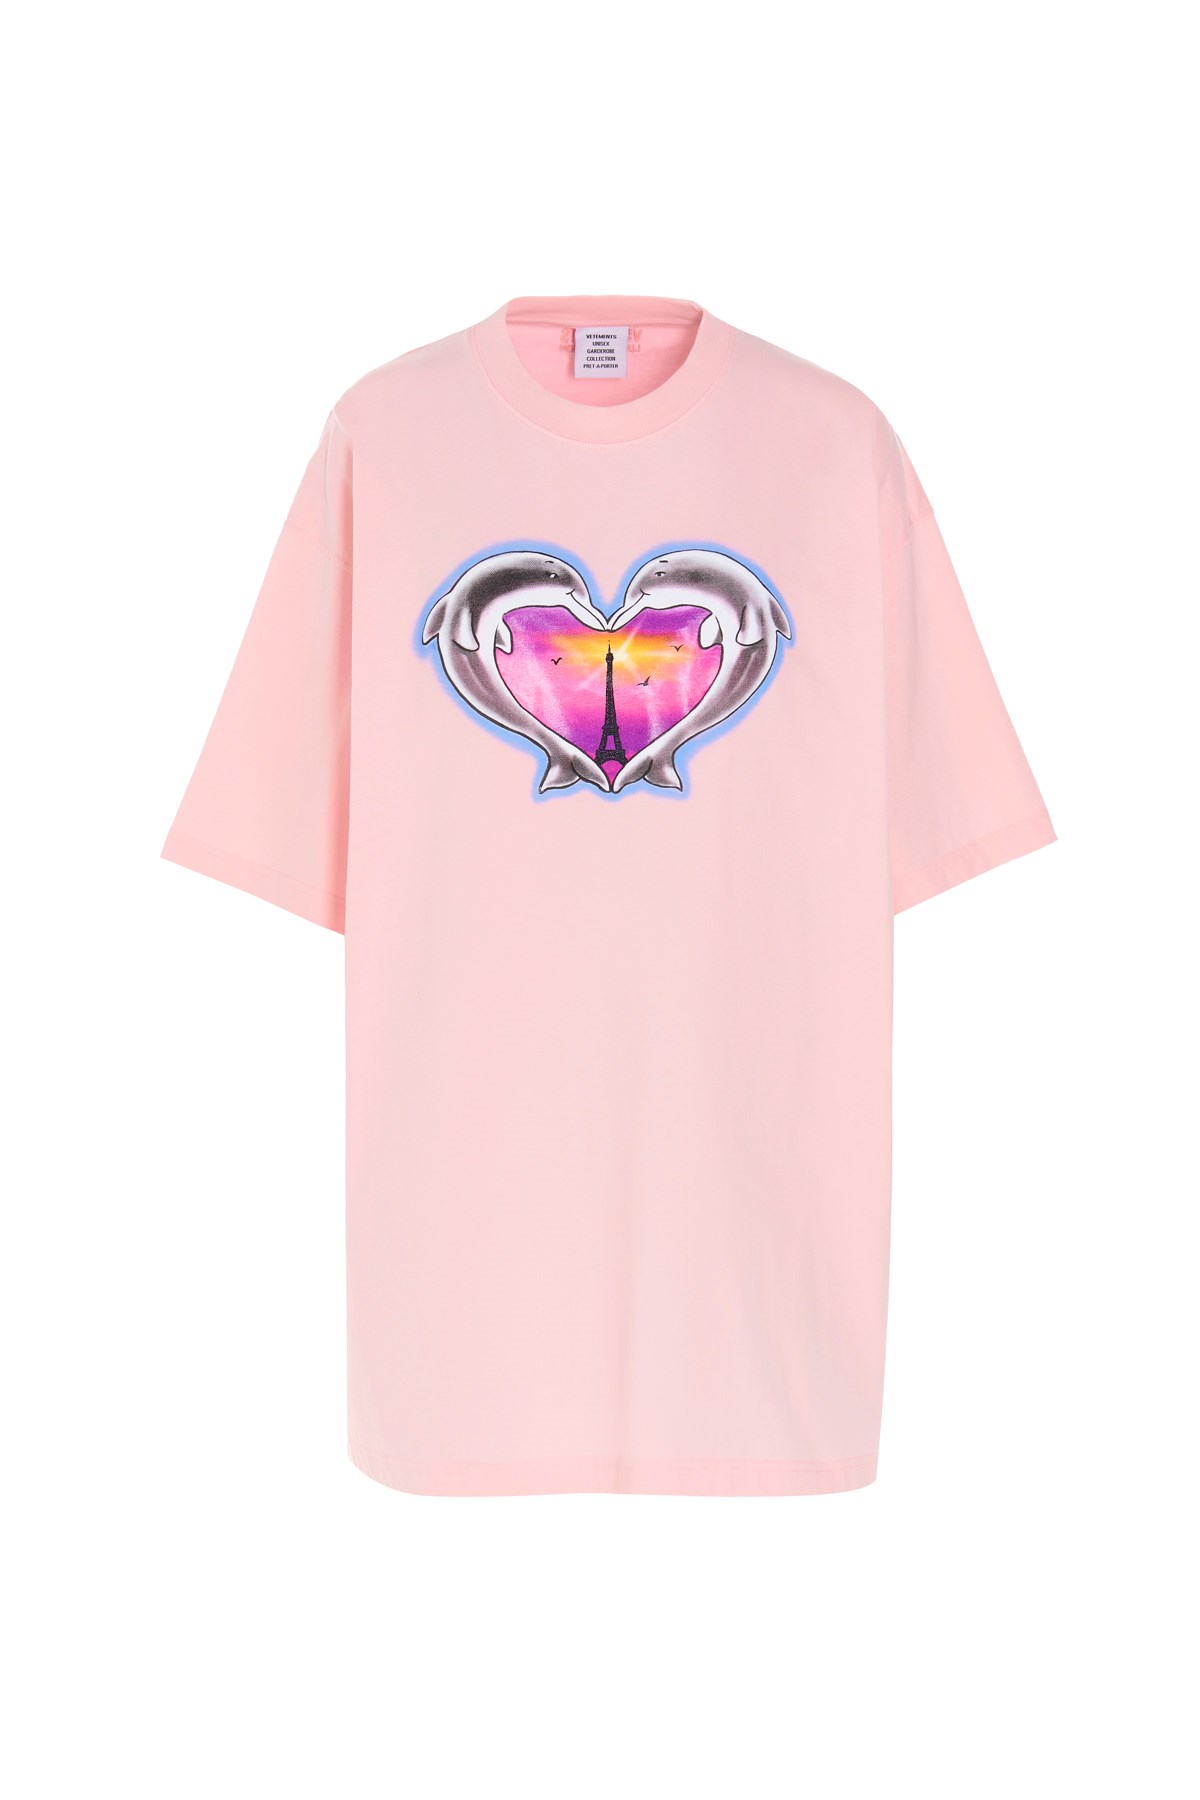 VETEMENTS 'Dolphins Heart’ T-Shirt